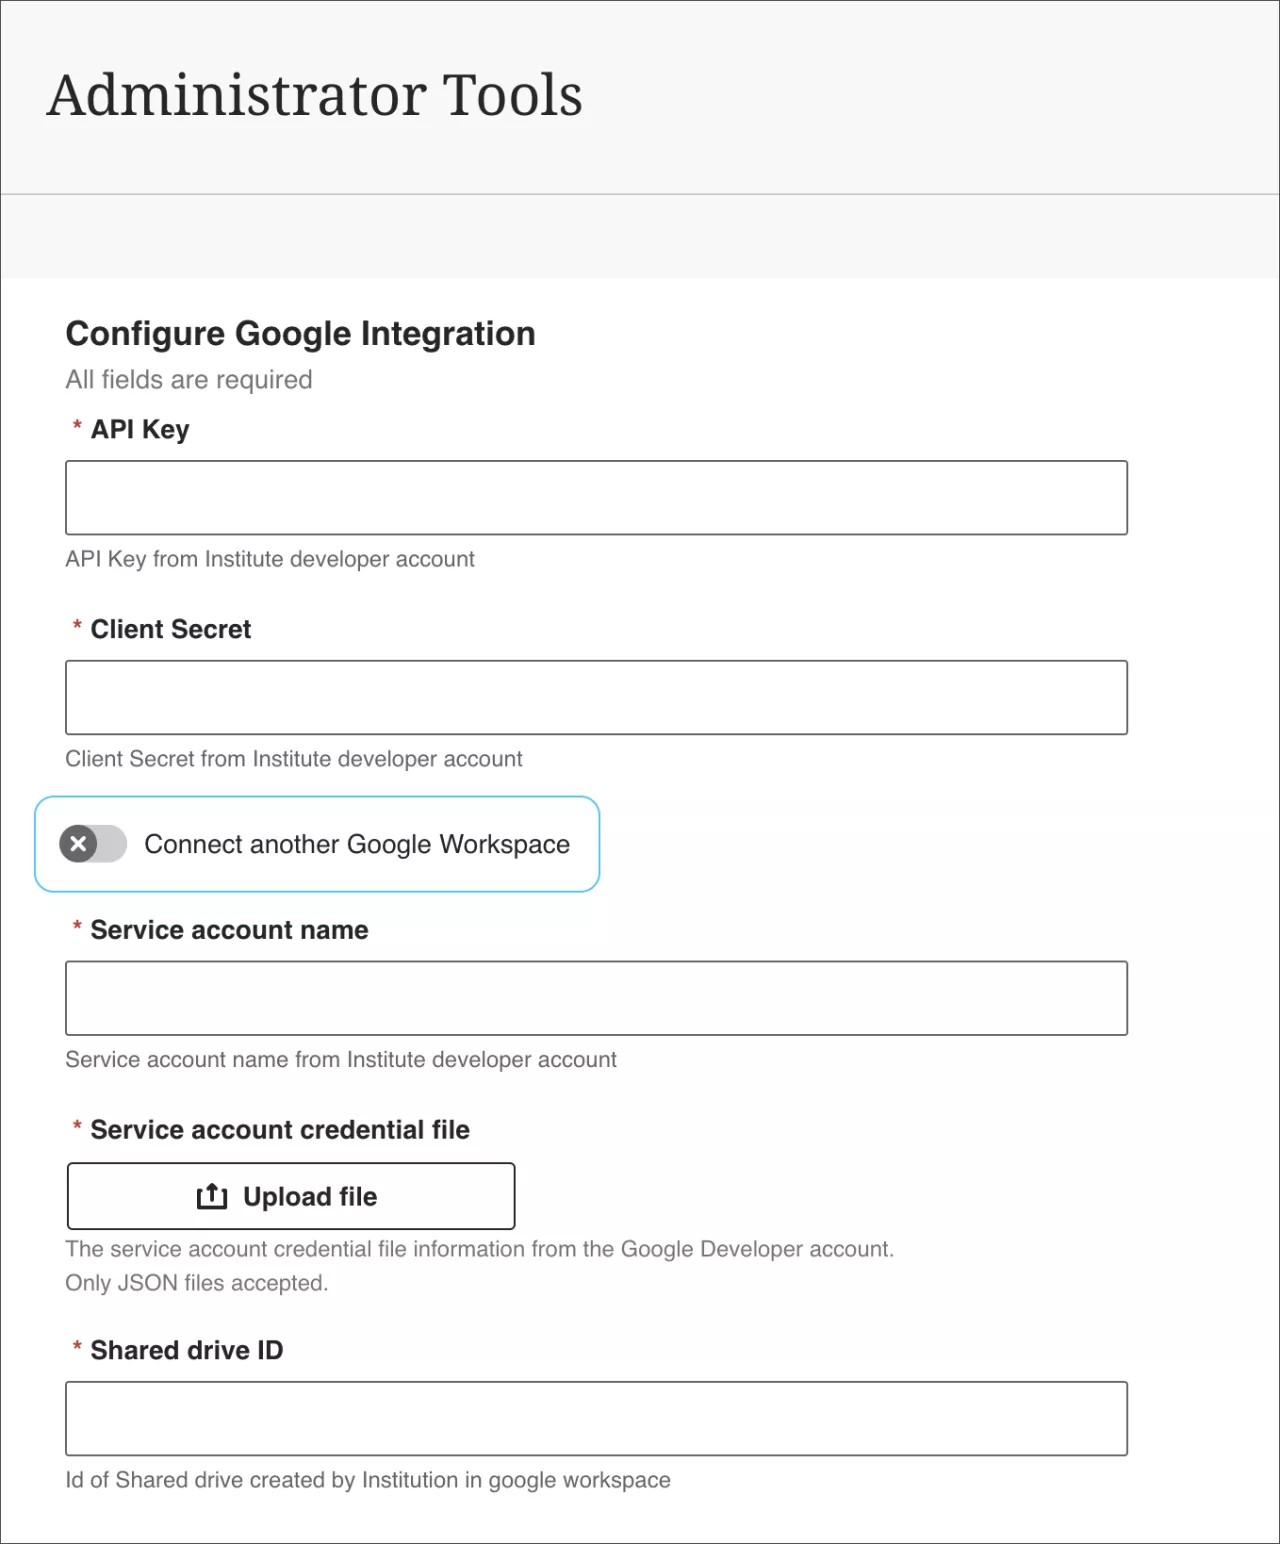 Administrator Tools screen to configure Google integration